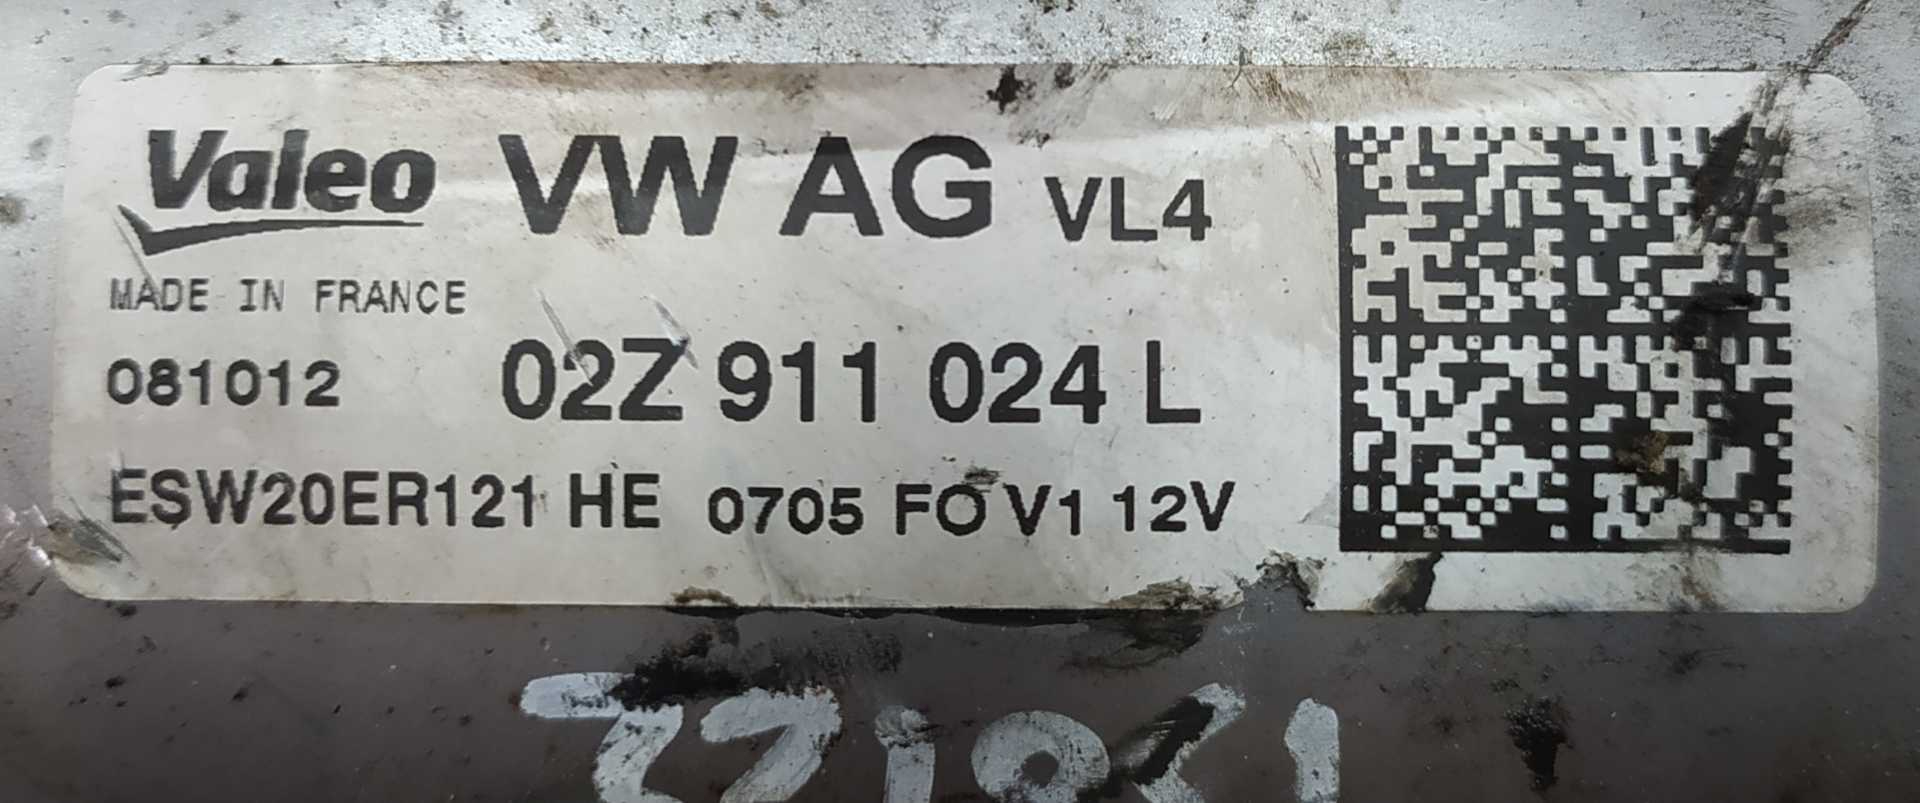 MOTOR DE ARRANQUE VOLKSWAGEN GOLF VII 1.6 TDI (77 KW / 105 CV) (08.2012 - ...)